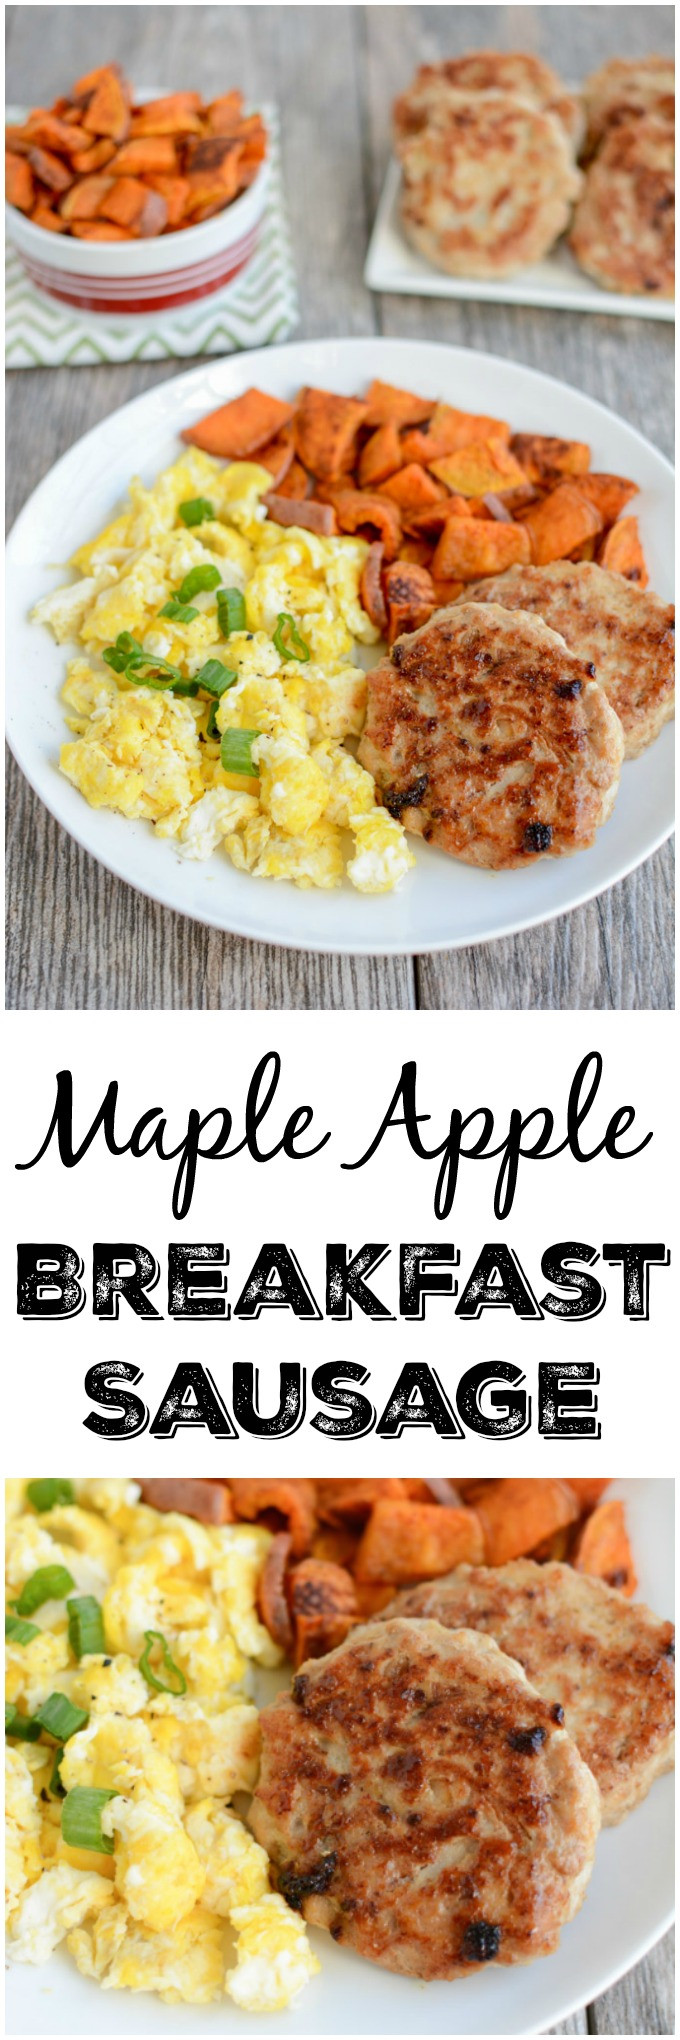 Maple Breakfast Sausage Recipes
 Maple Apple Breakfast Sausage